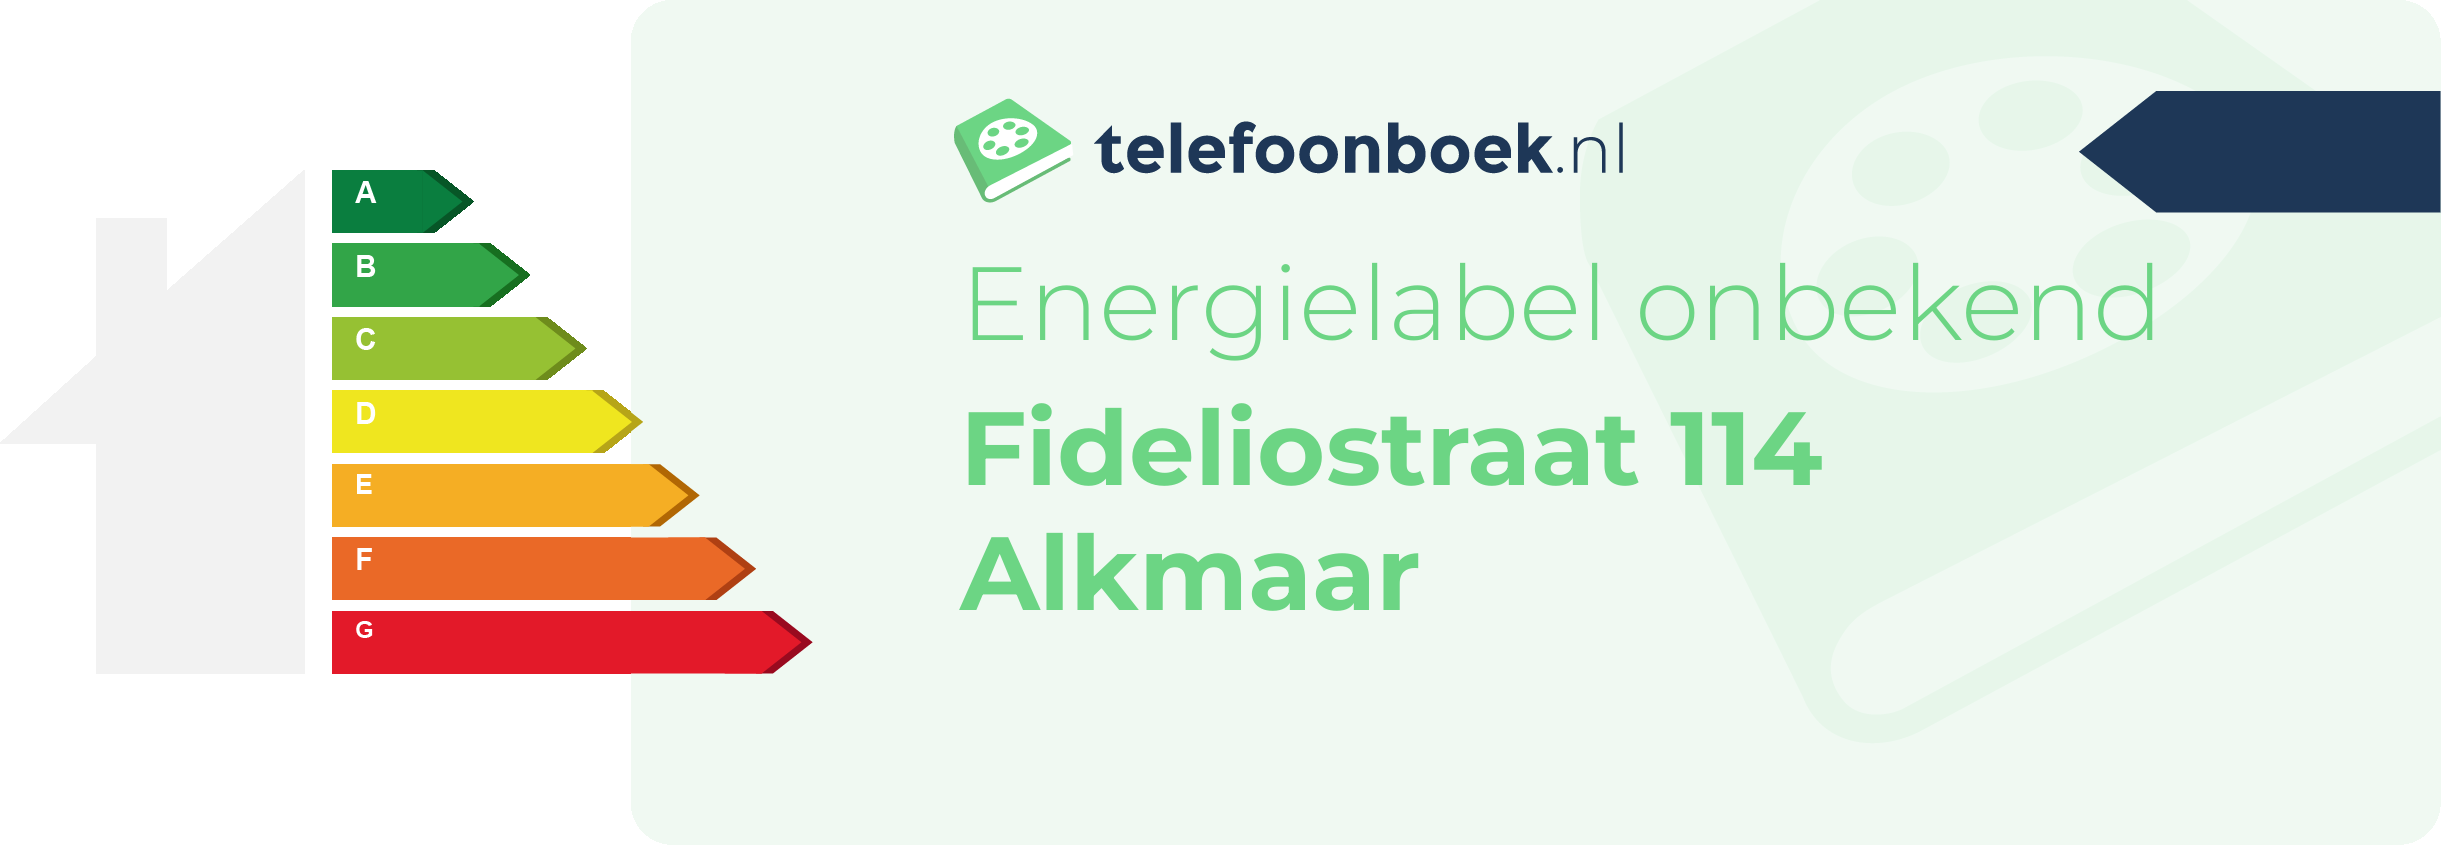 Energielabel Fideliostraat 114 Alkmaar